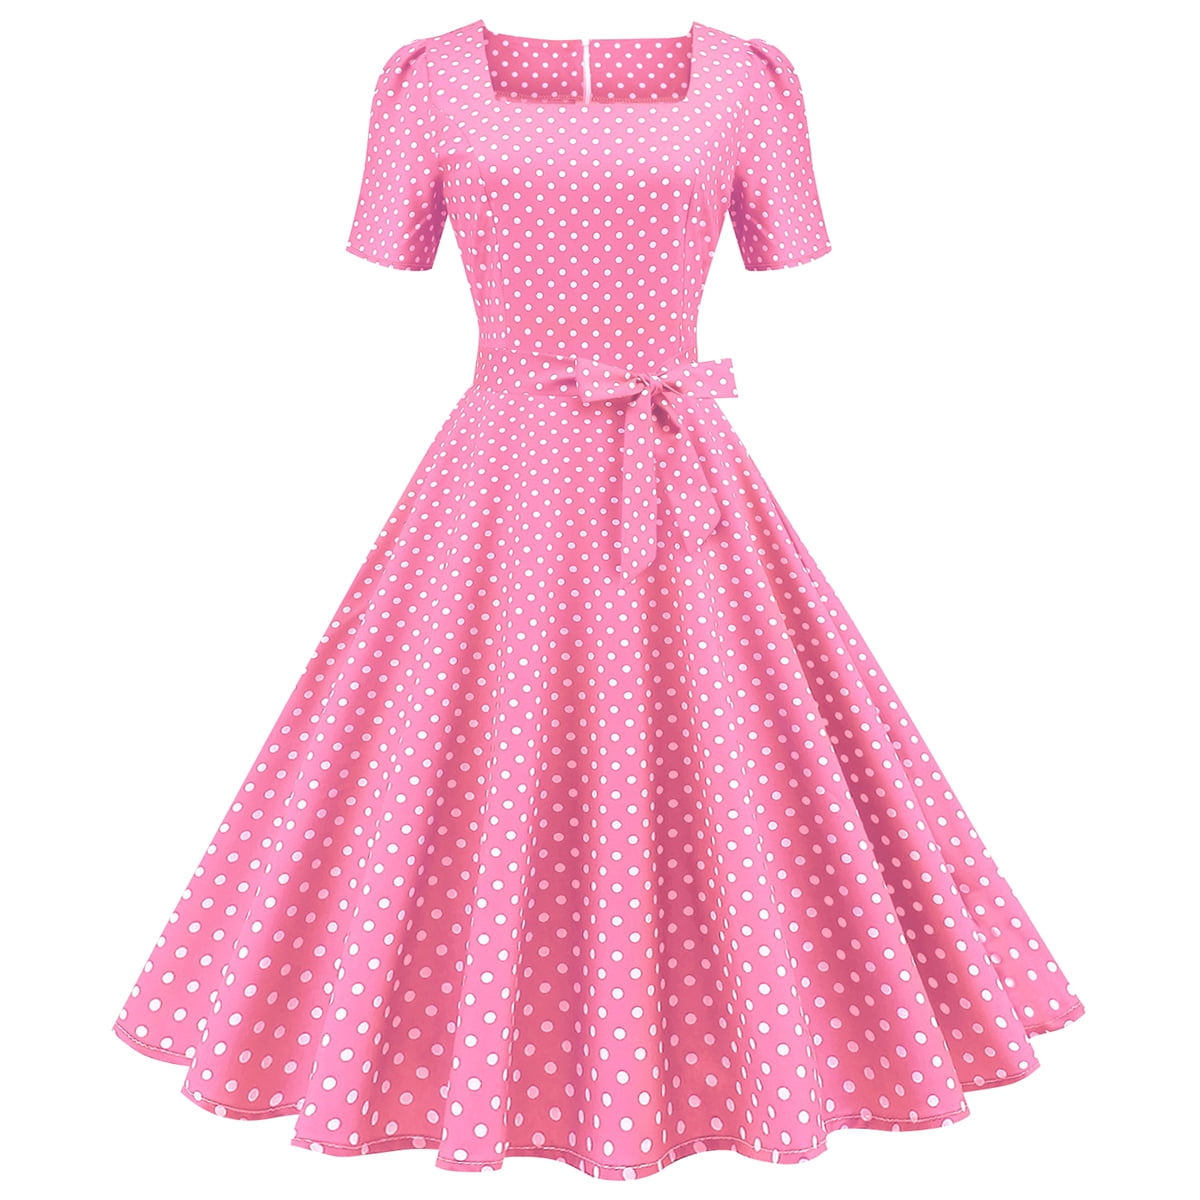 IBTOM CASTLE Women Polka Dots Vintage Dress 1950s Retro Rockabilly ...